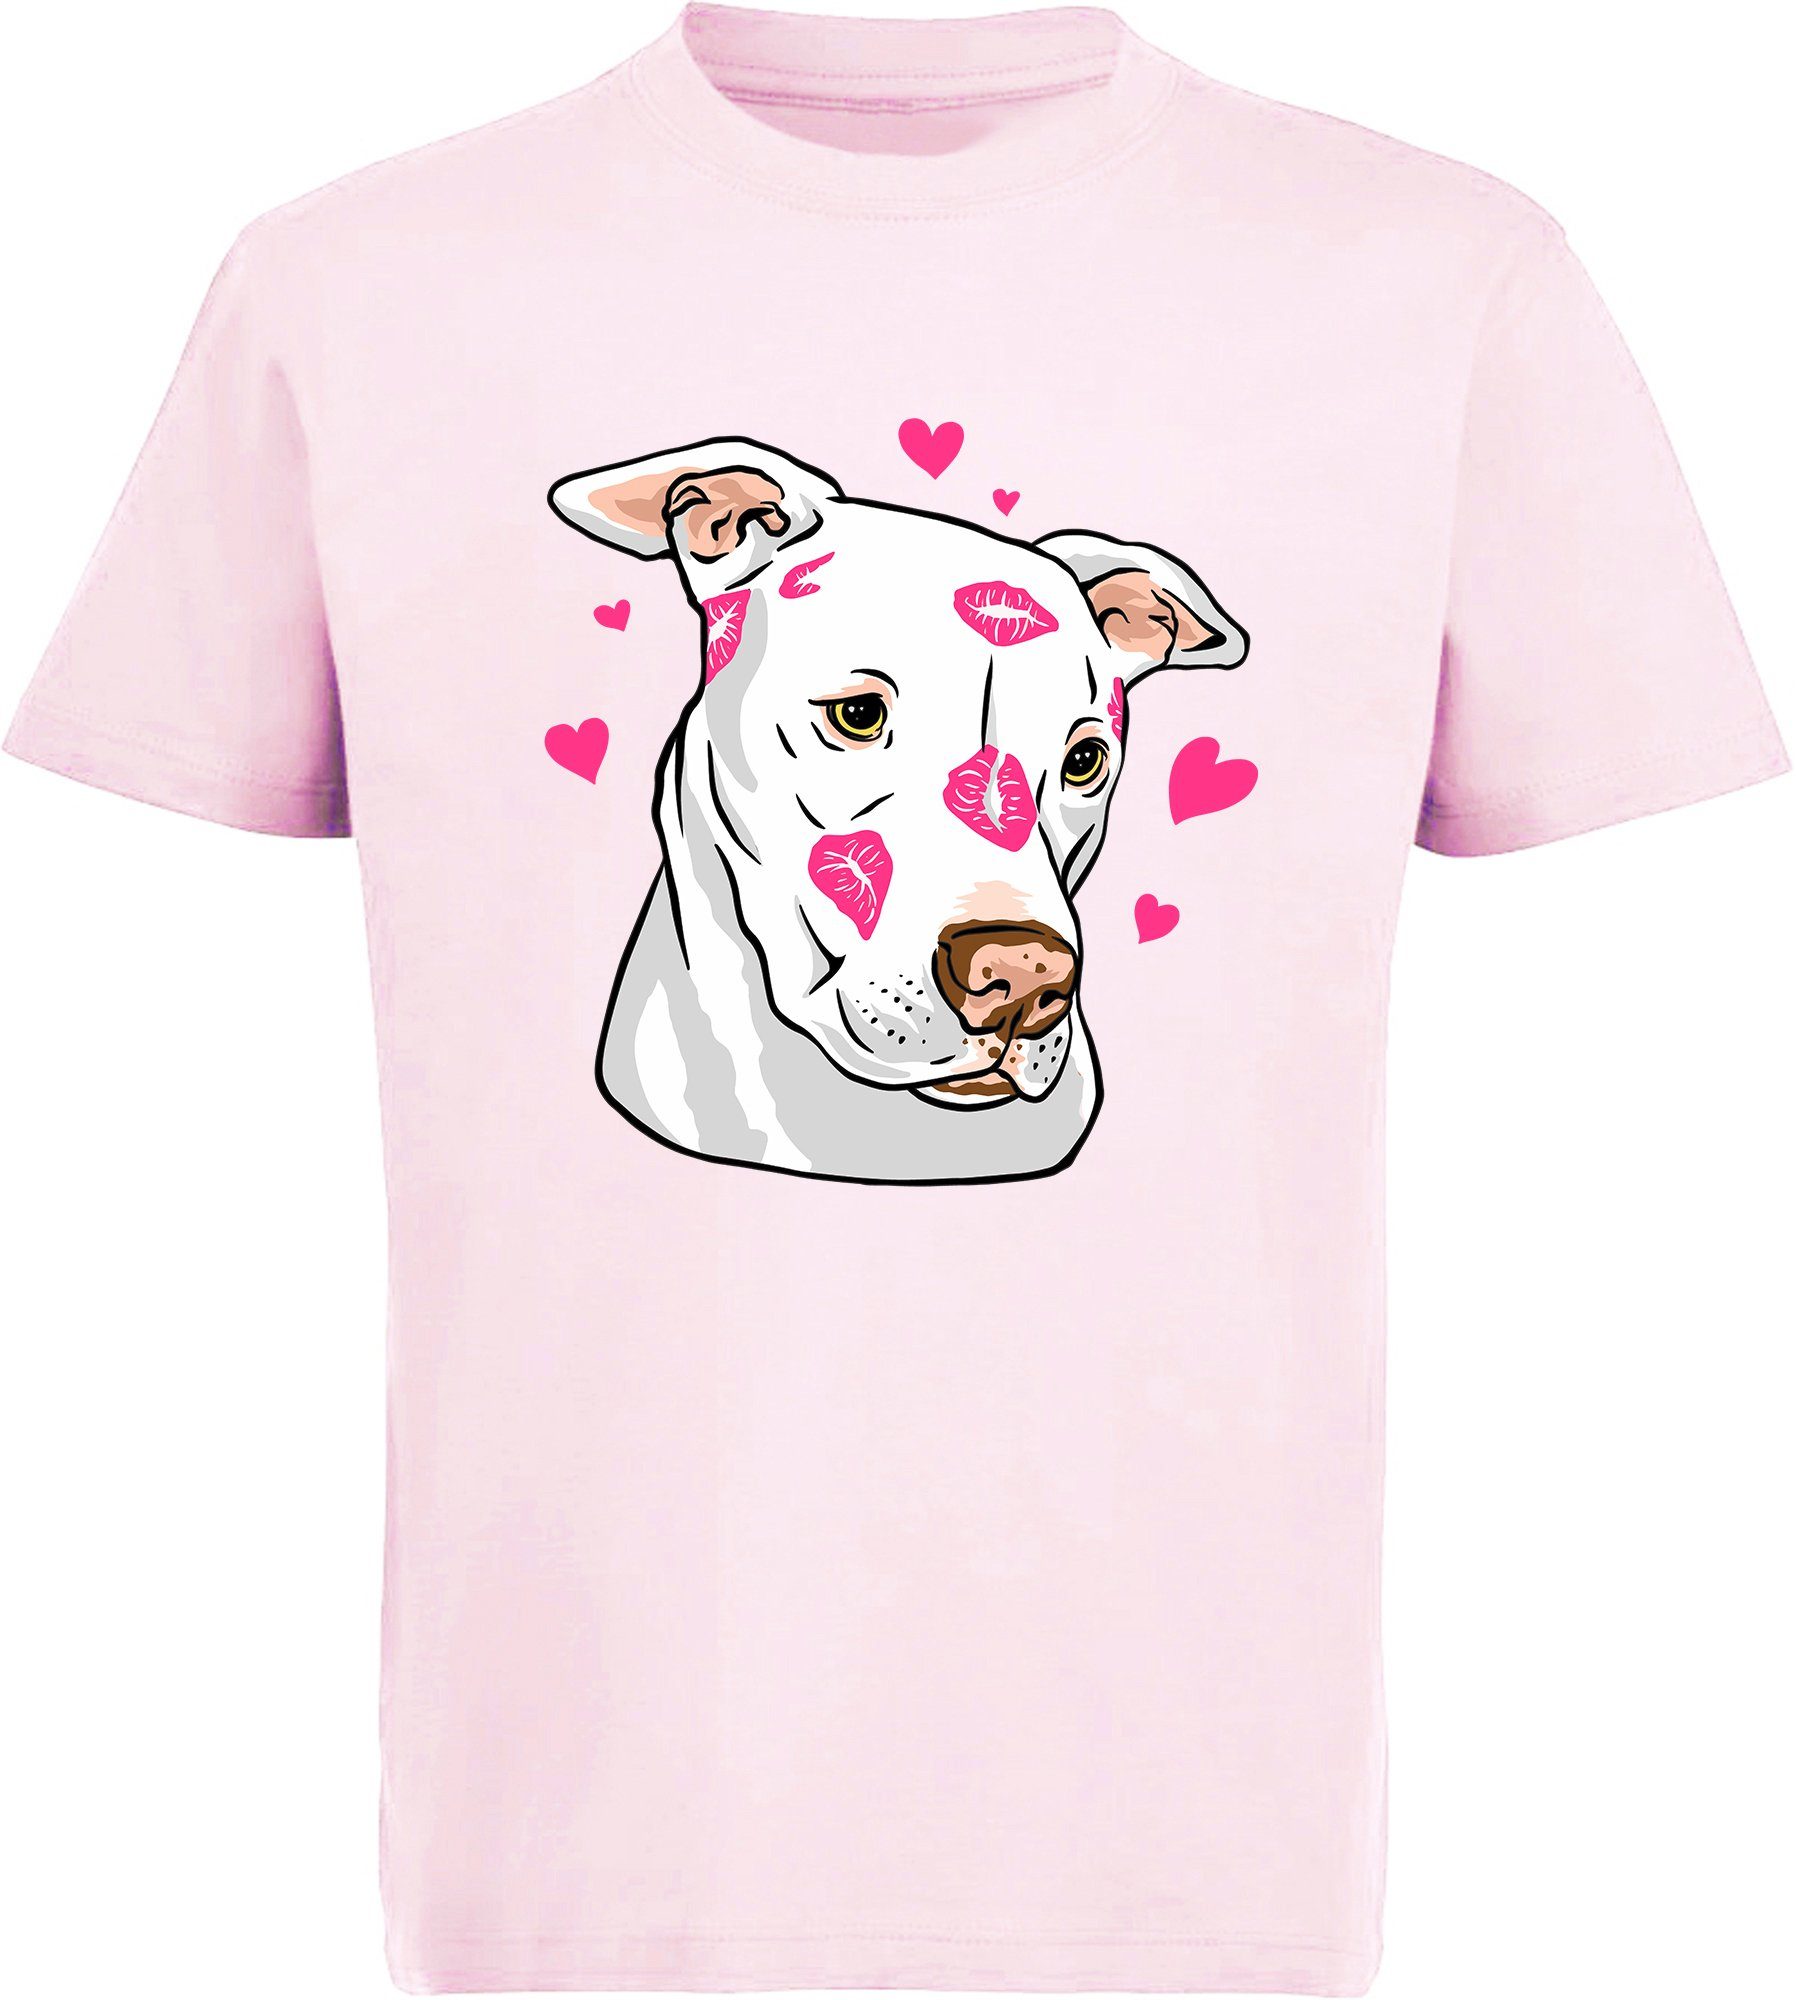 MyDesign24 Print-Shirt bedrucktes T-Shirt rosa Hunde Kinder mit Herzen Baumwollshirt Aufdruck, Pitbull mit i229 